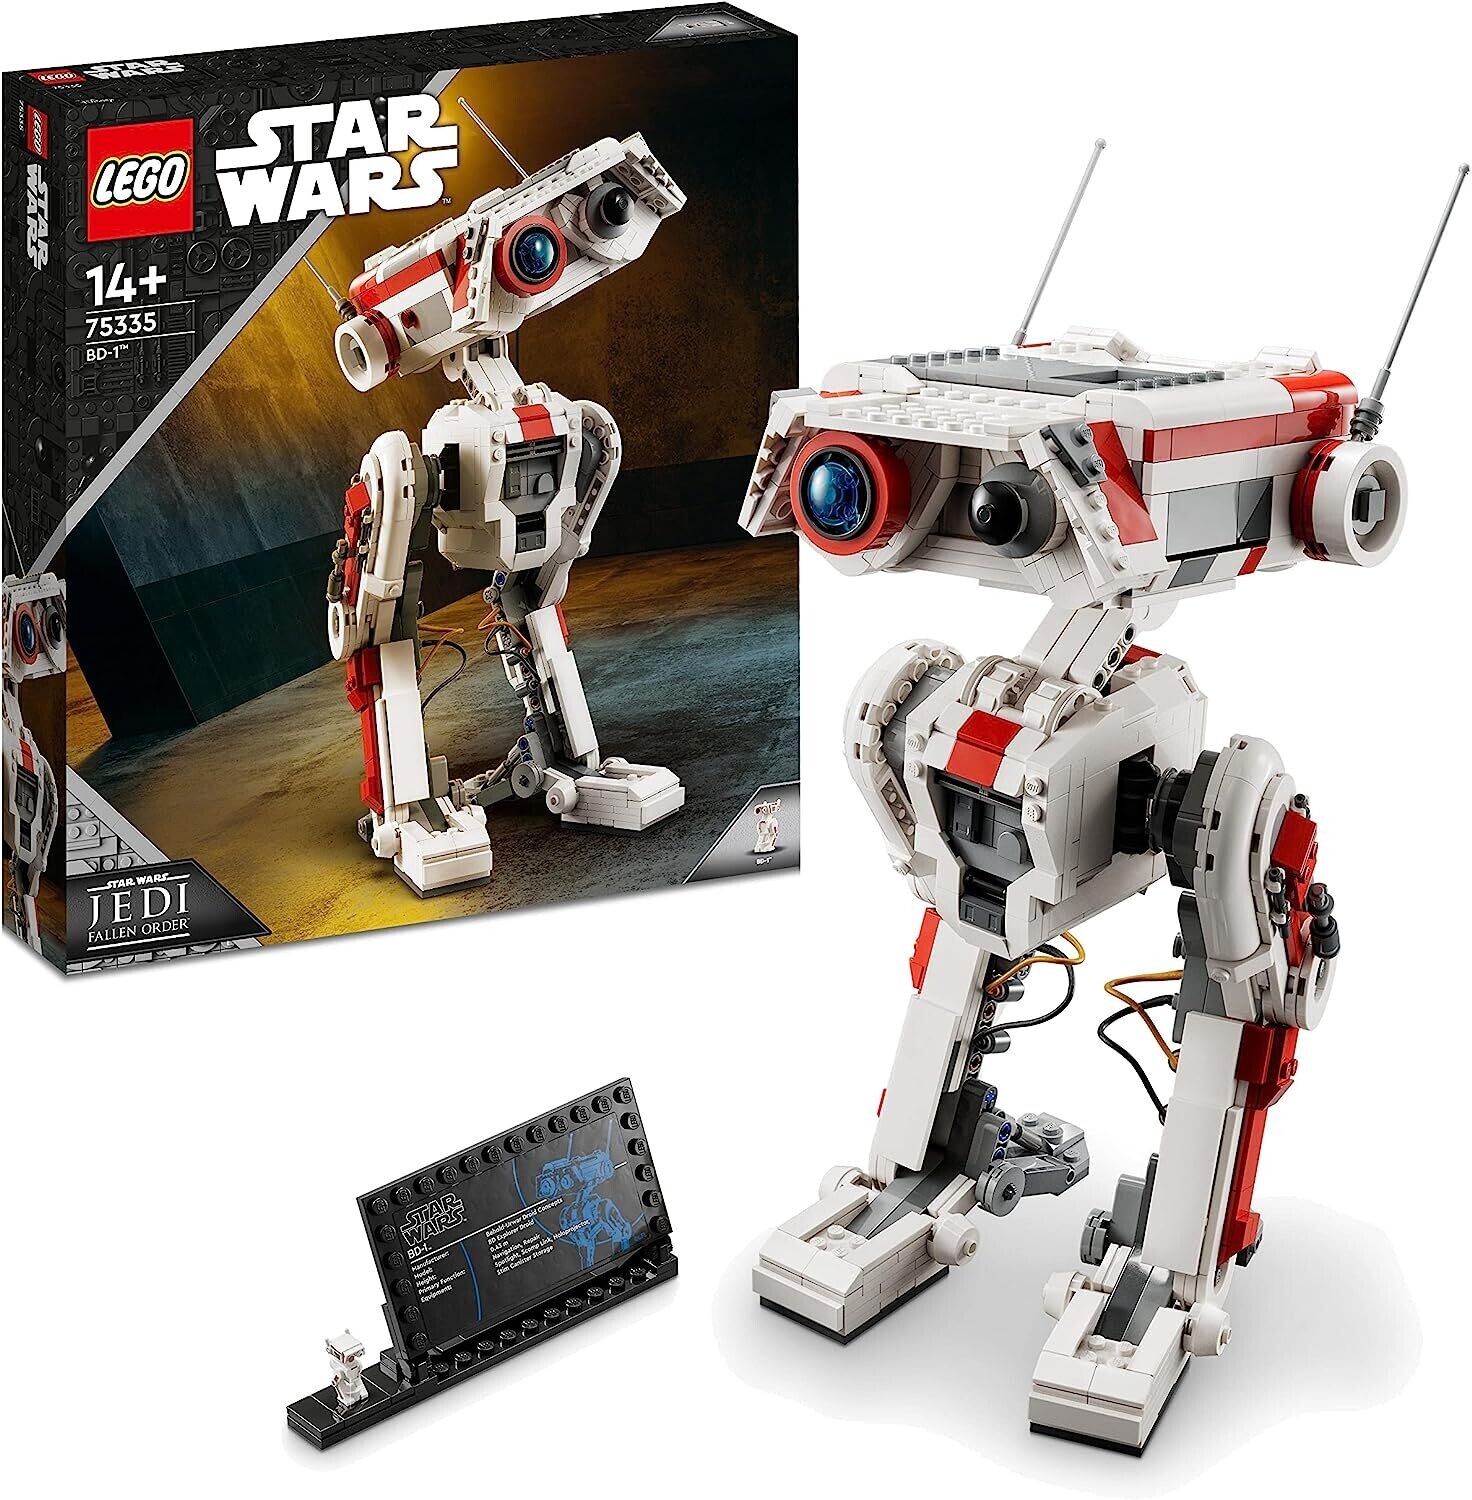 Lego Star Wars BD-1 robot